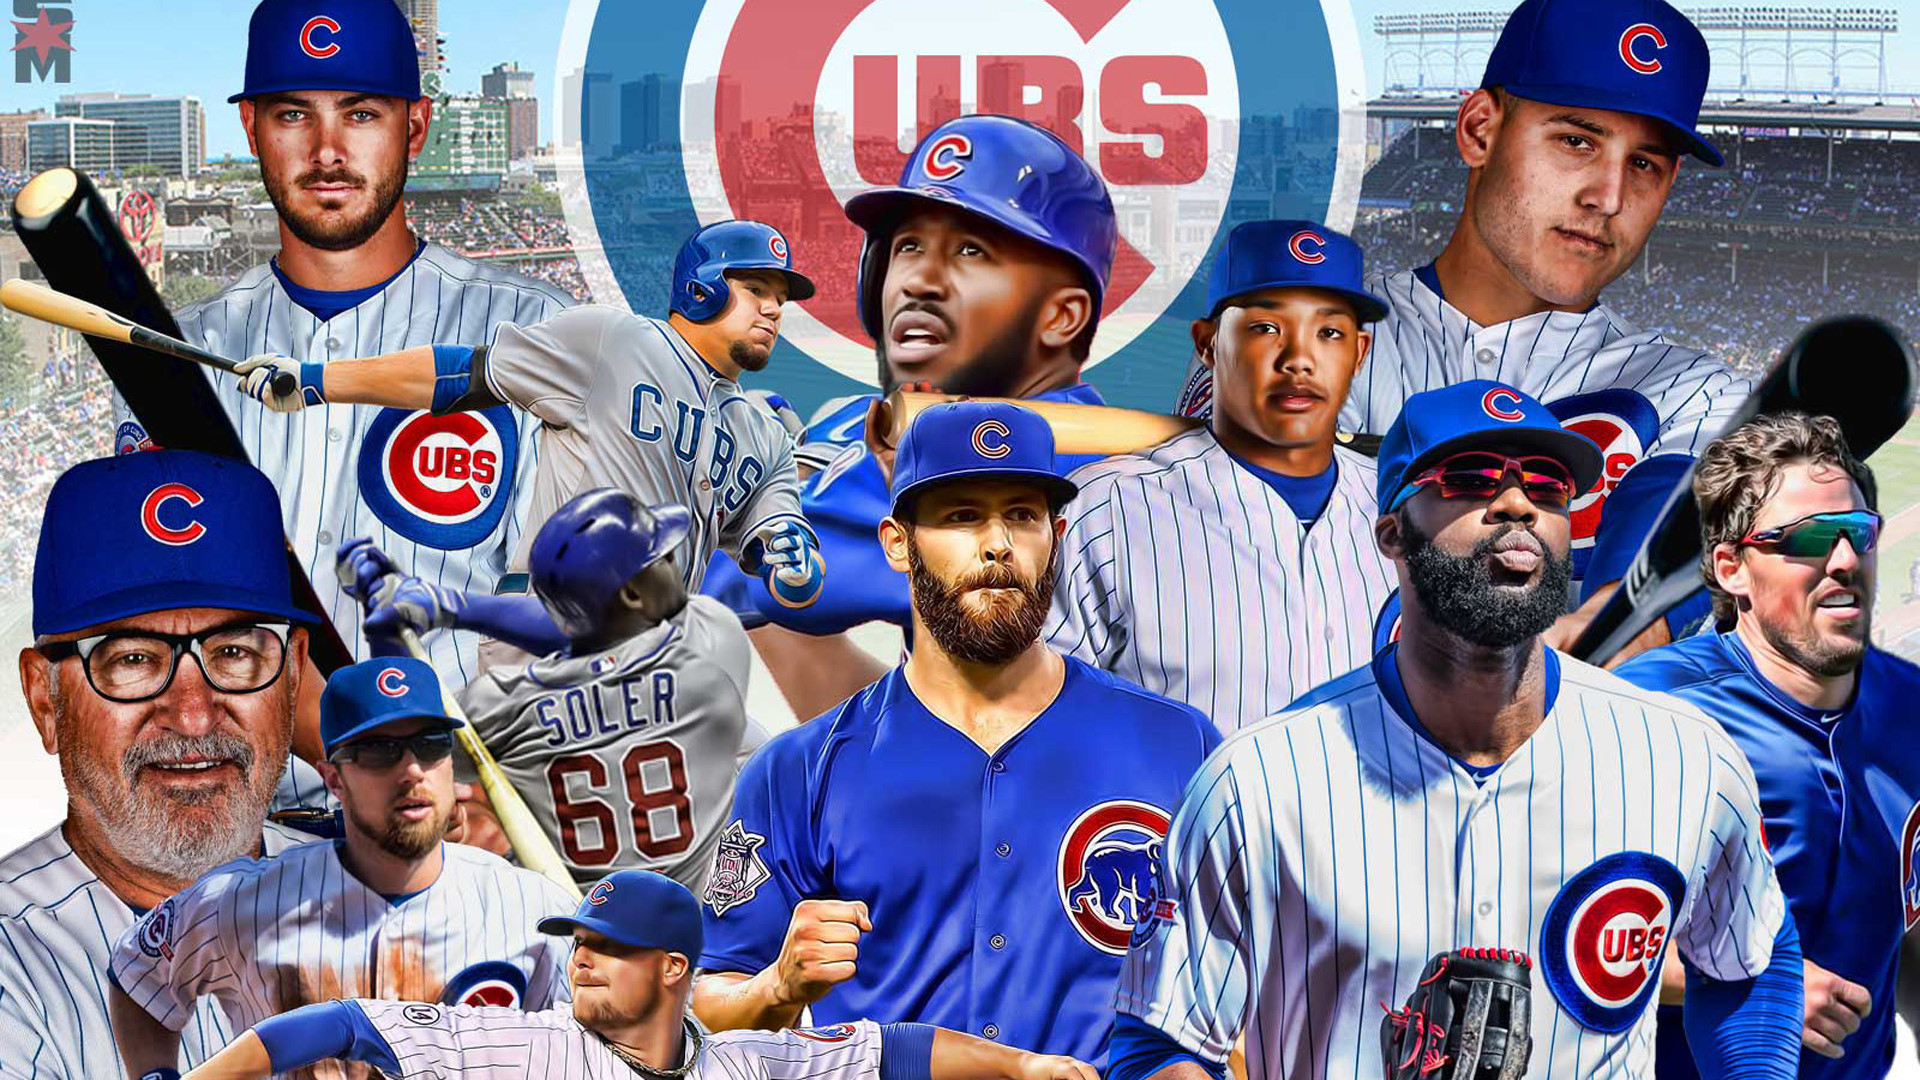 1920x1080 Cubs Wallpaper for your Desktop Chicago Cubs